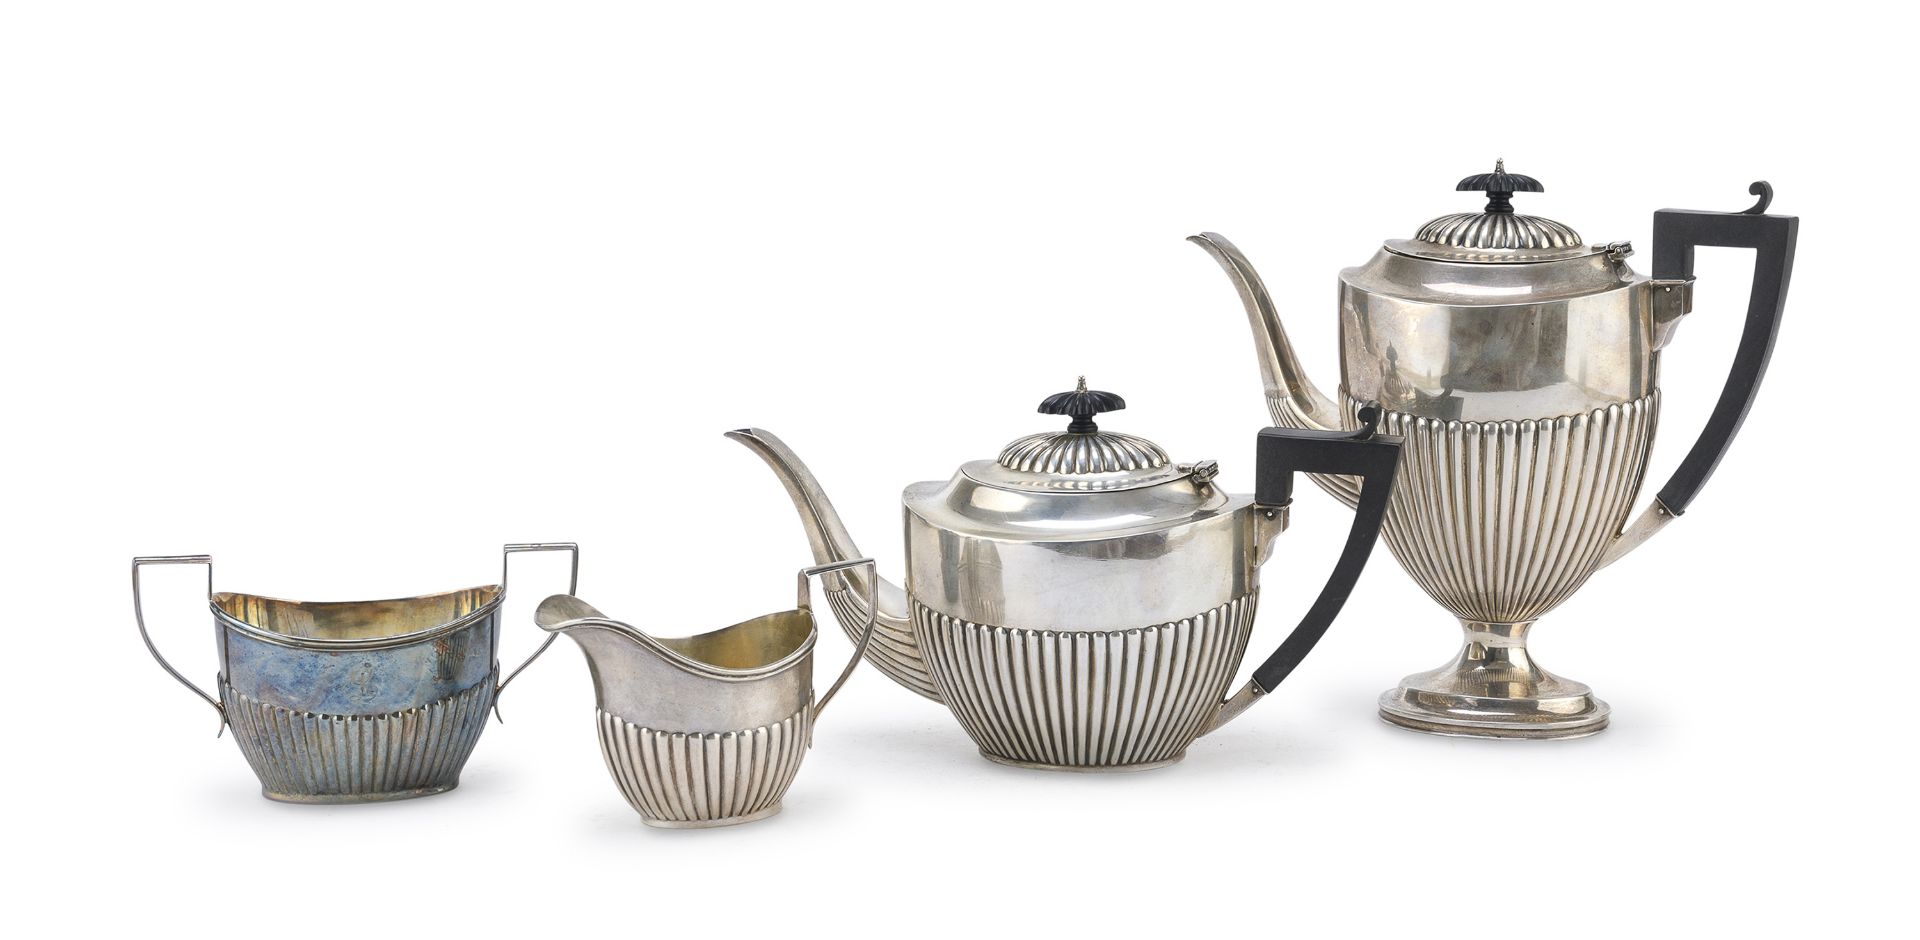 SILVER TEA AND COFFEE SET UNITED KINGDOM 19th CENTURY